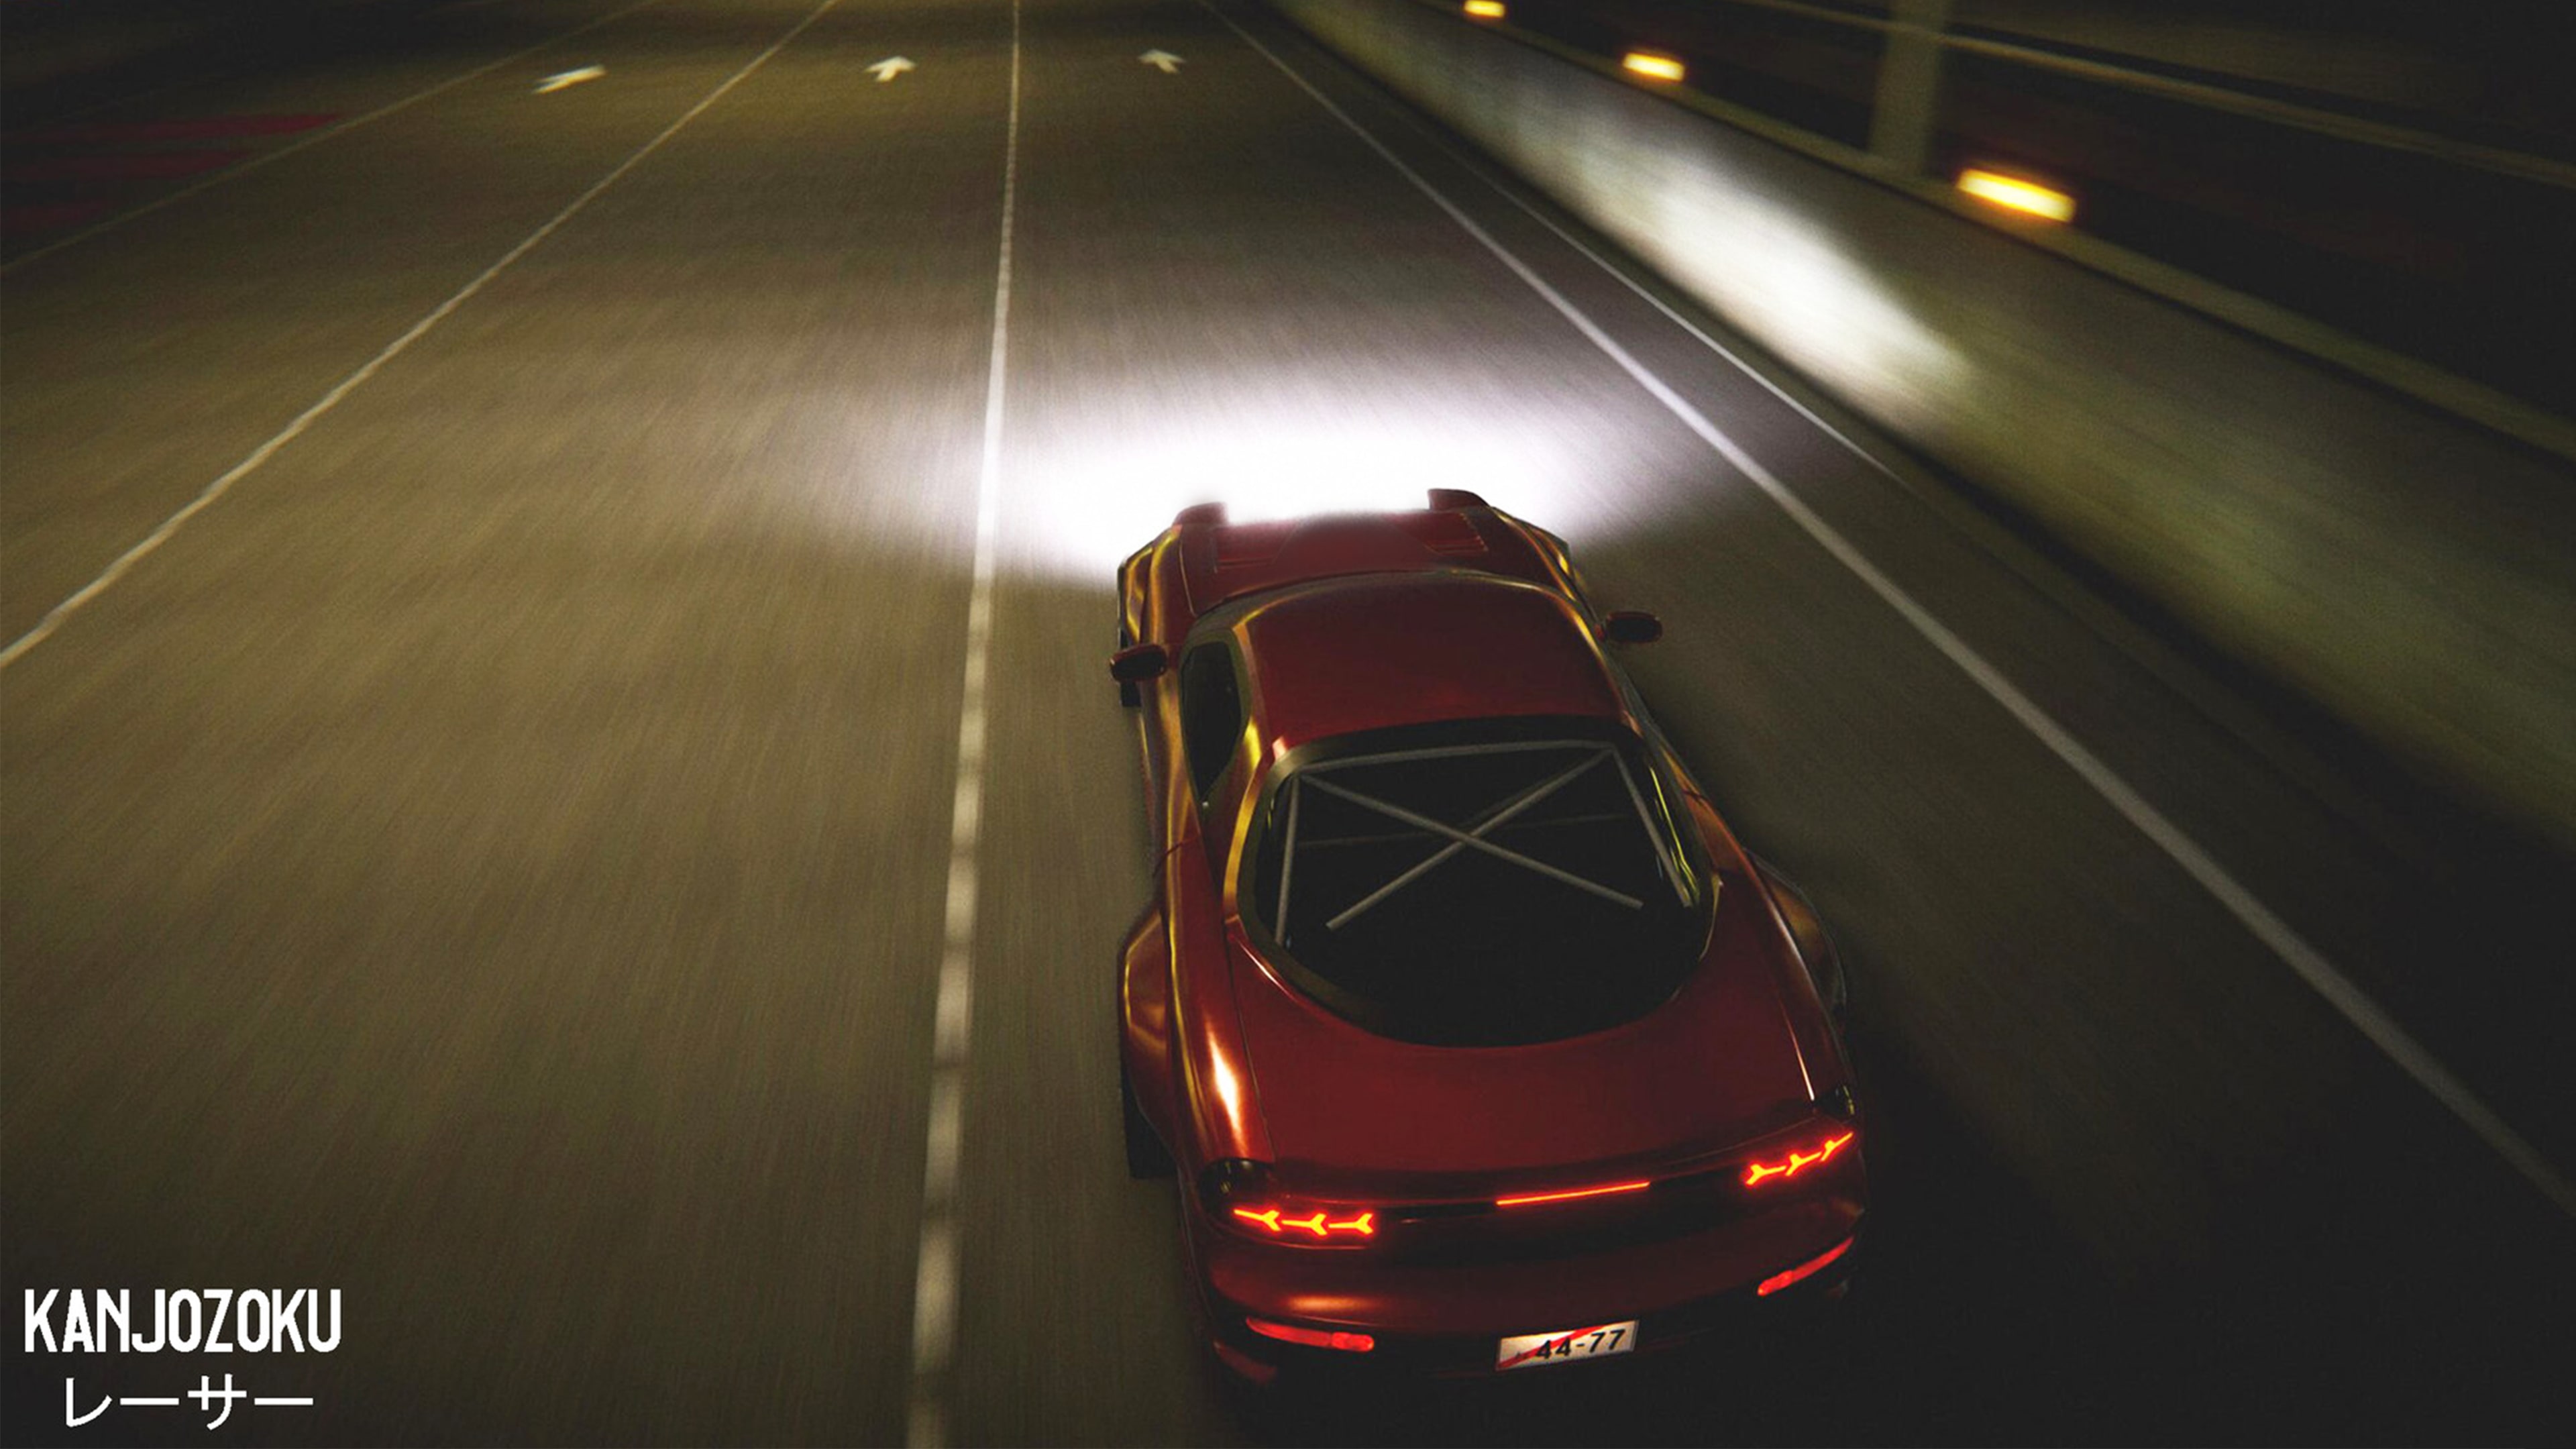 Kanjozoku Game レーサー — Car Racing & Highway Driving Simulator Games on PS4 —  price history, screenshots, discounts • USA